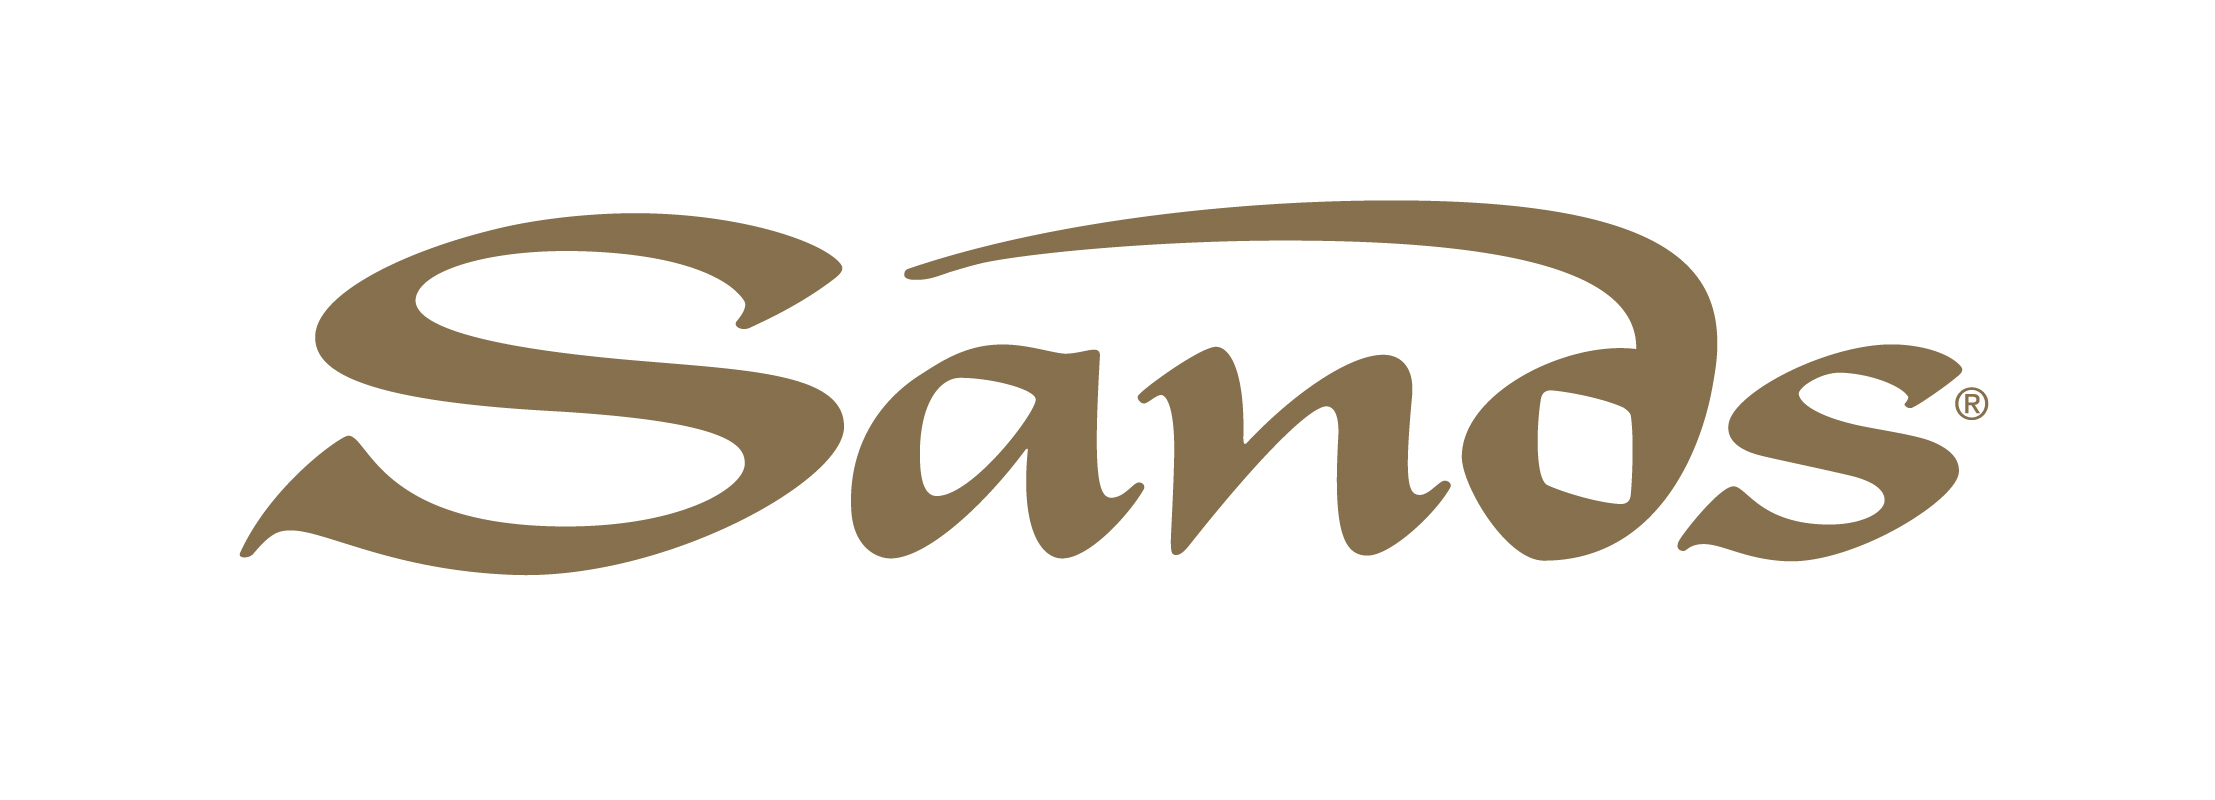 Las Vegas Sands Announces Executive Leadership Team